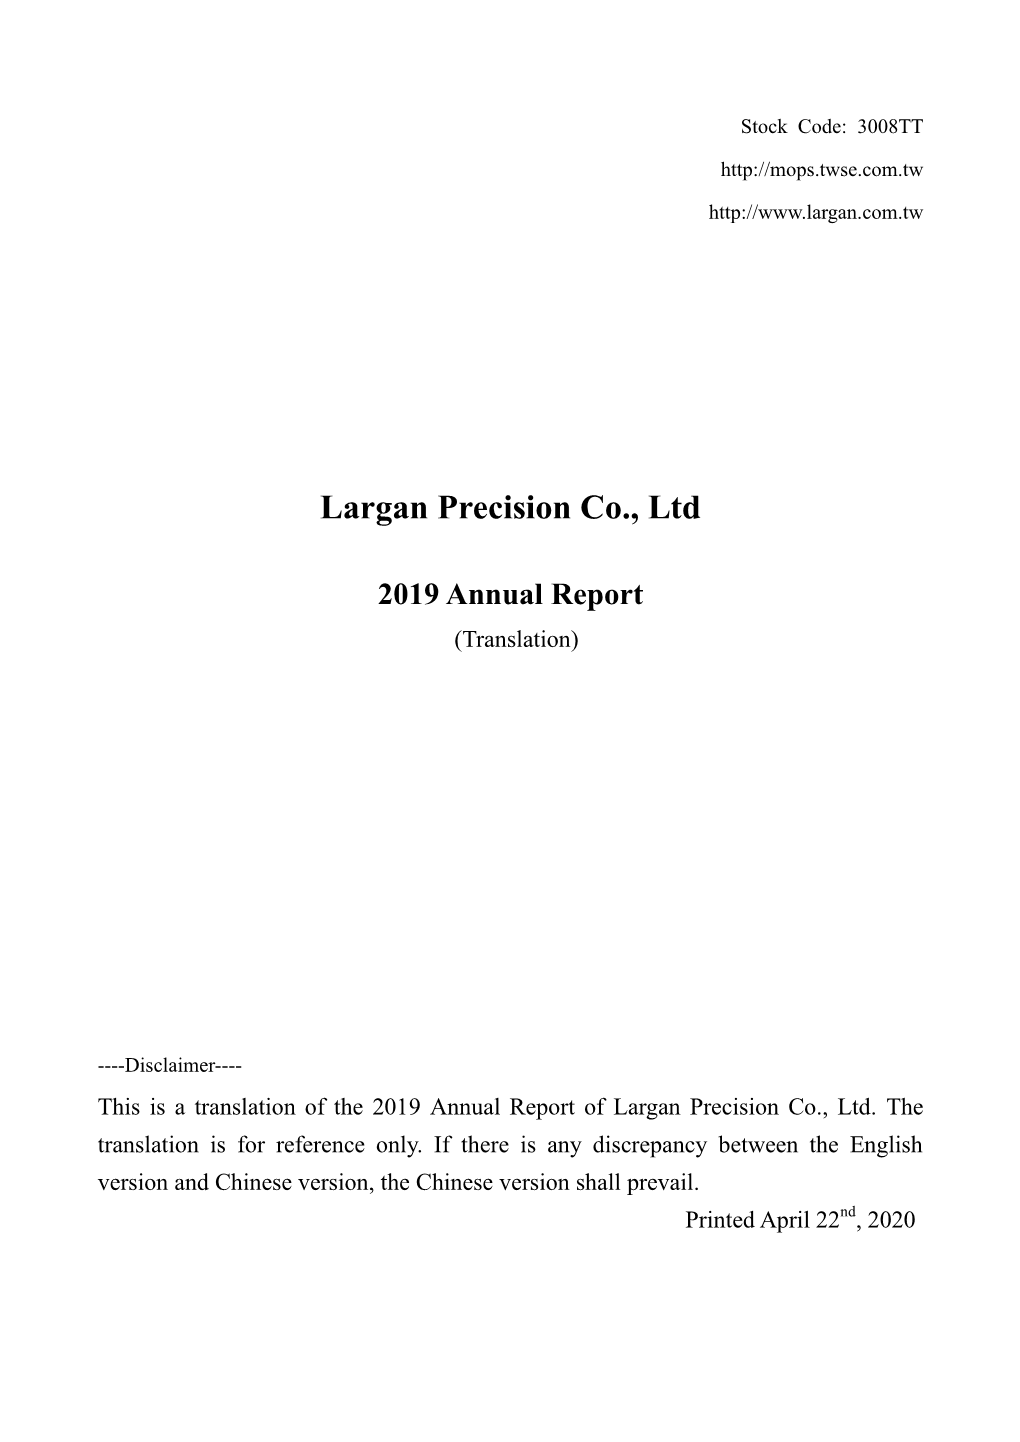 Largan Precision Co., Ltd